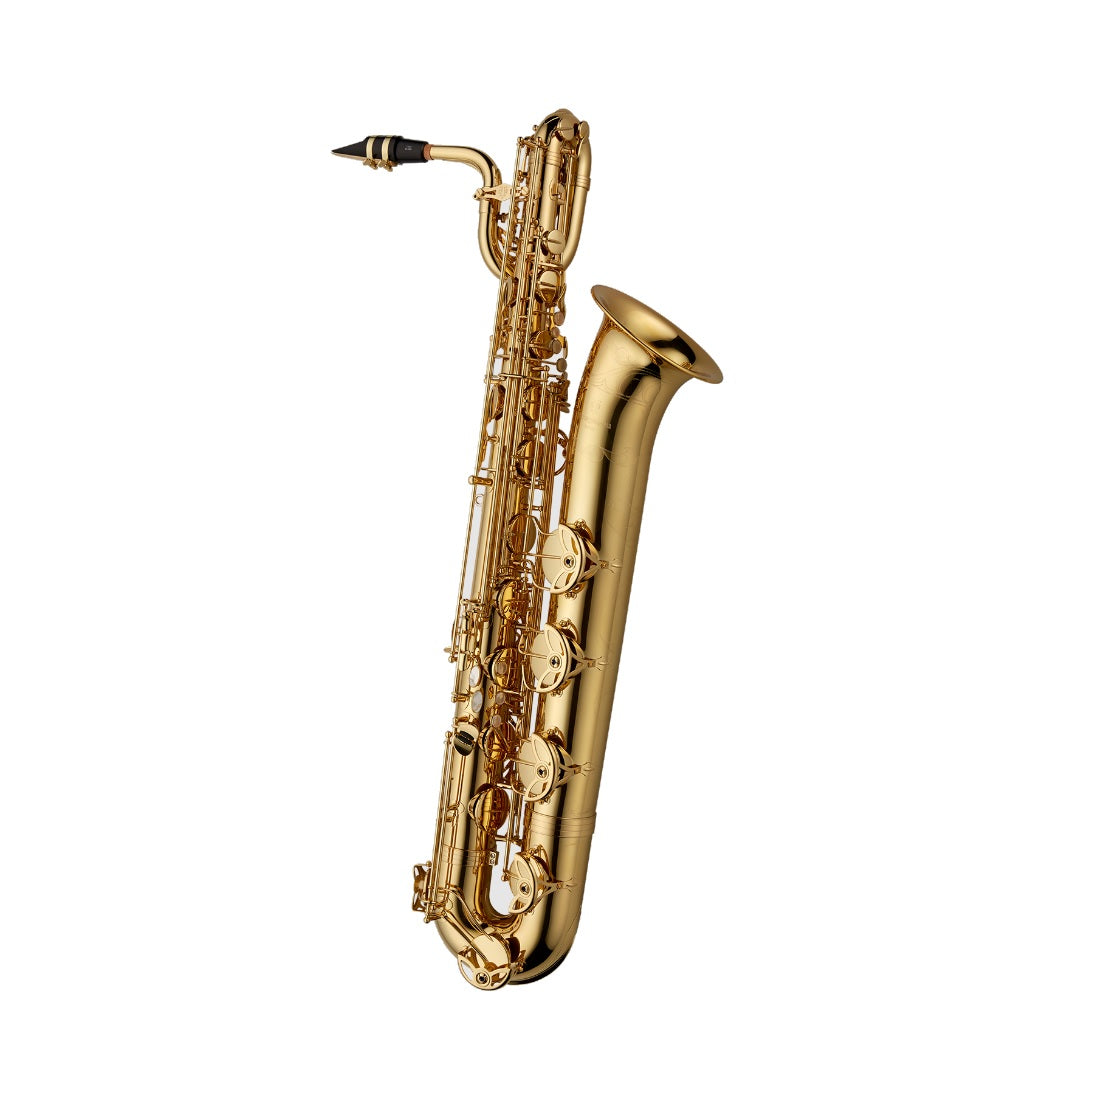 Yanagisawa WO Elite Series Baritone Saxophones - Premium Baritone Saxophone from Yanagisawa - Just $9839! Shop now at Poppa's Music